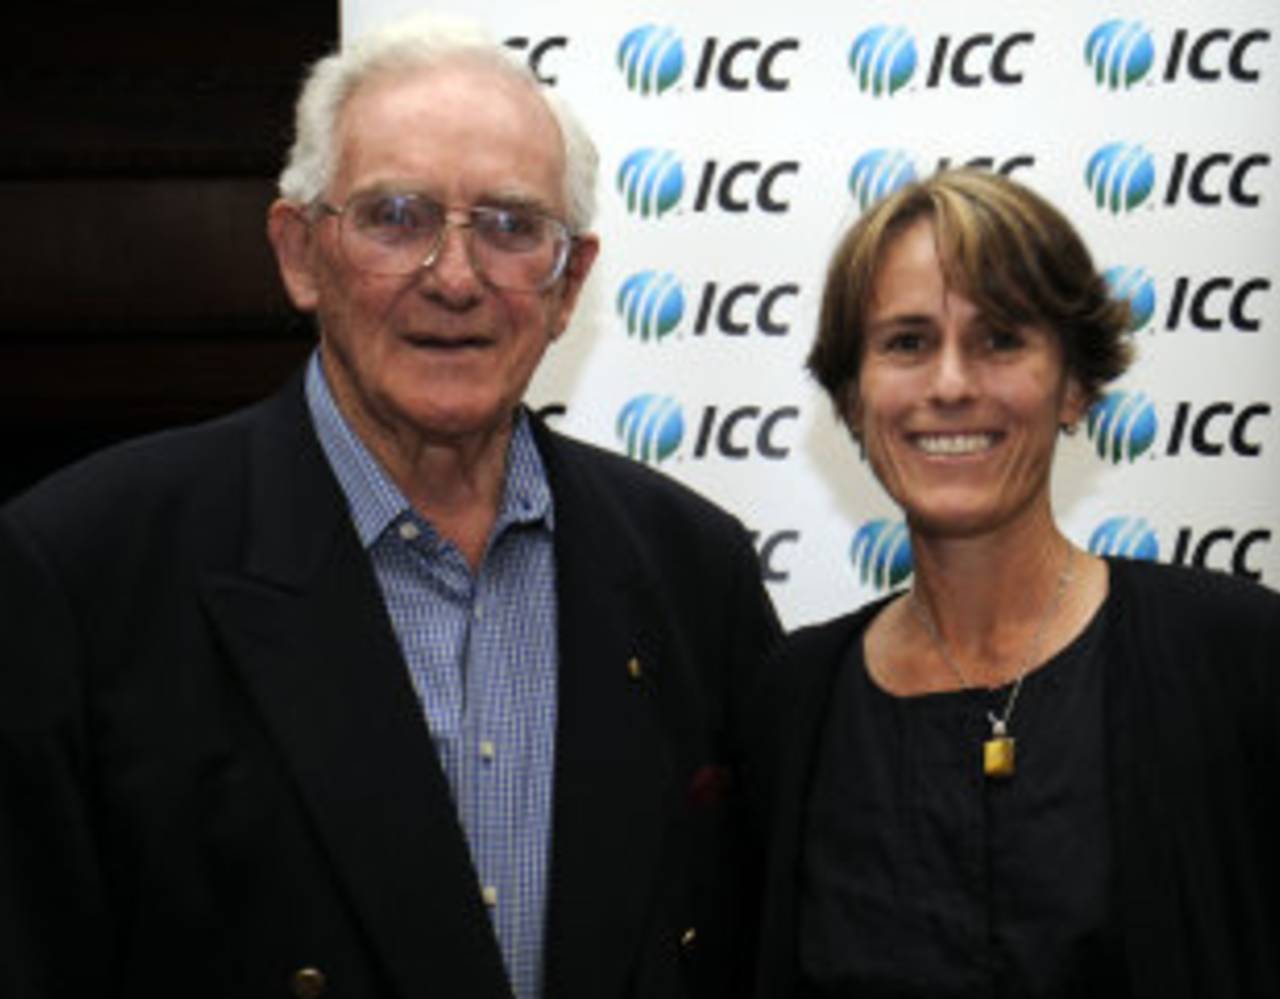 ICC Hall of Fame inductees Alan Davidson and Belinda Clark strike a pose, ICC Awards, London, September 12, 2011